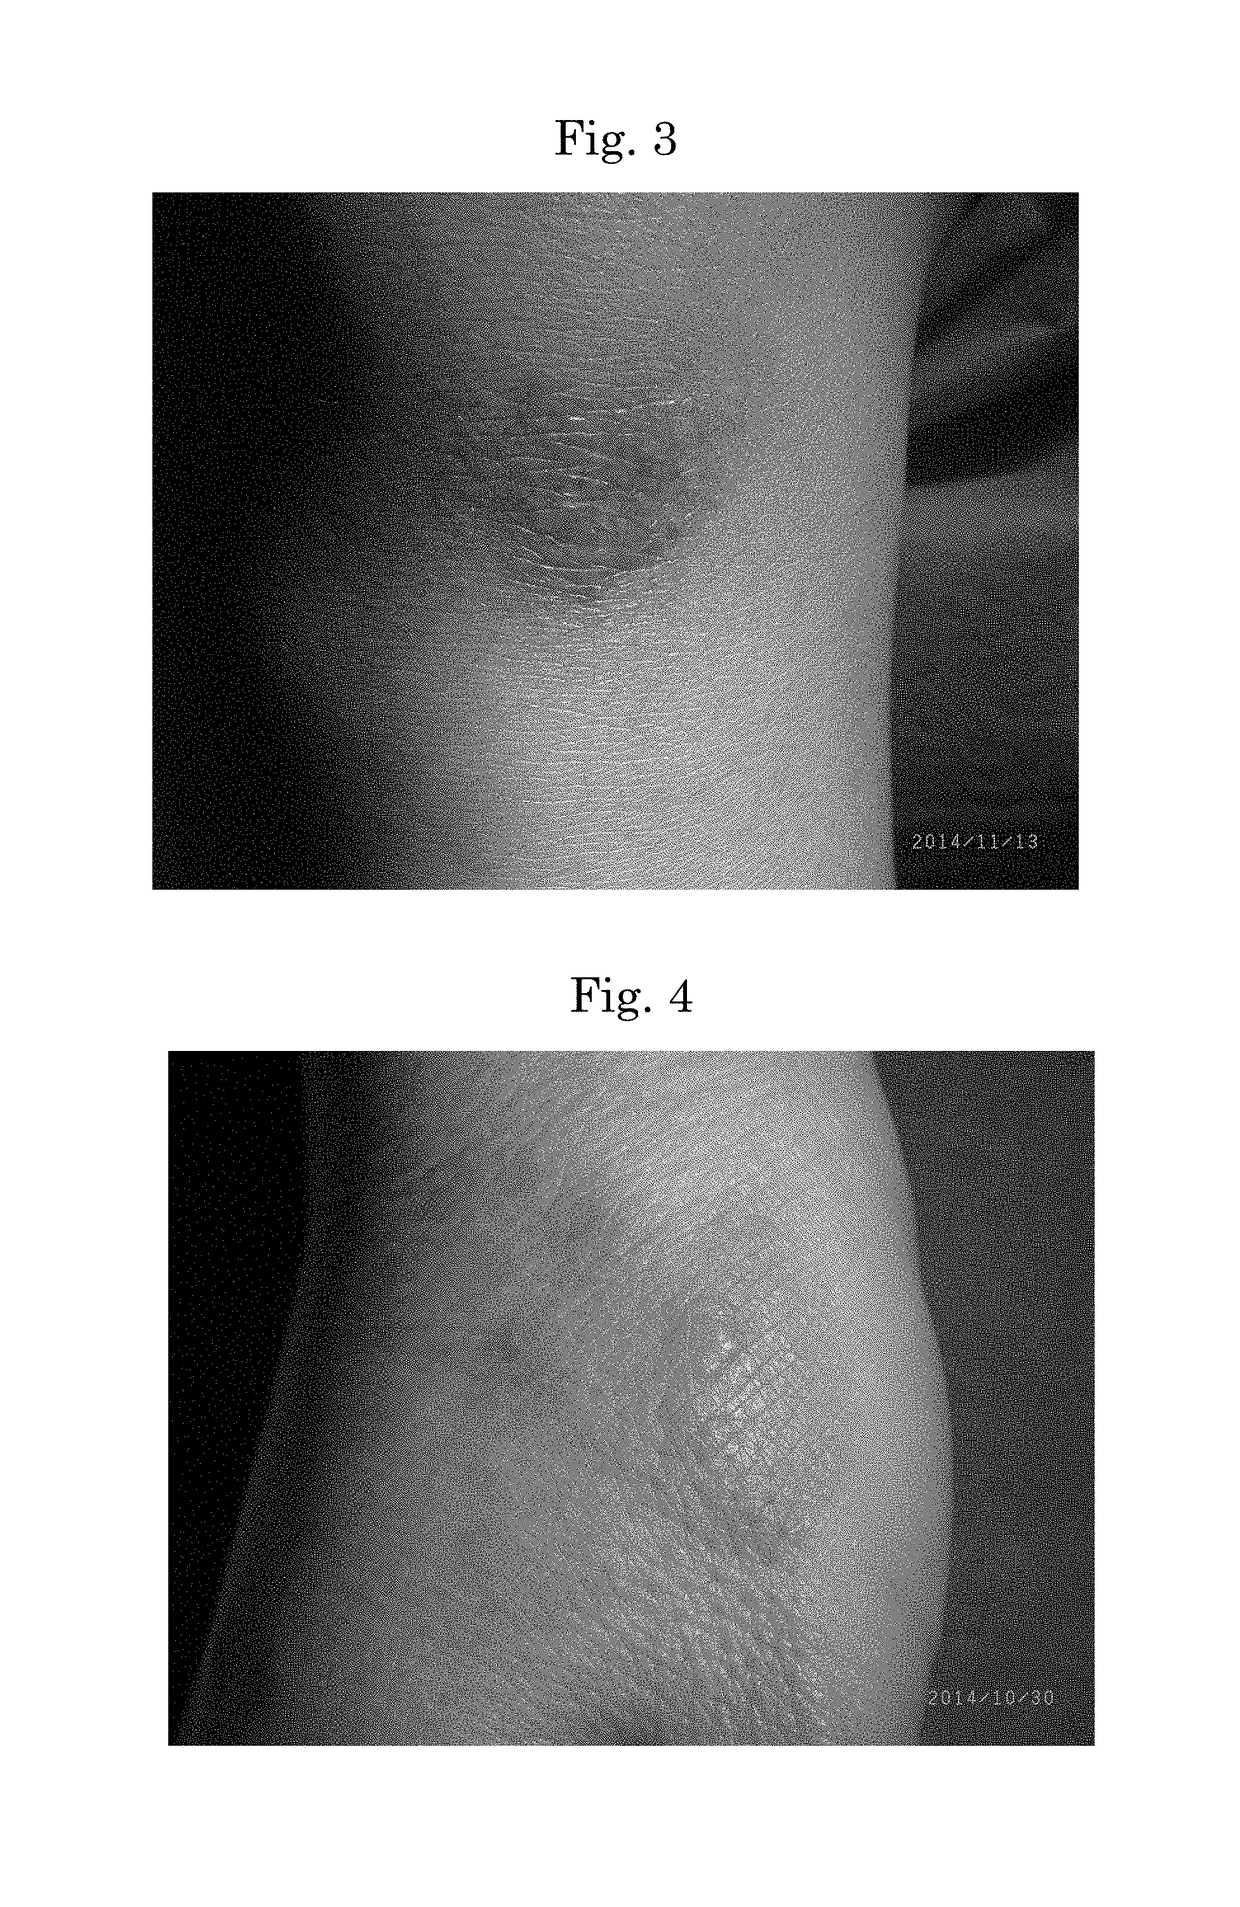 Method for coating skin abrasion, laceration, burn or oedema after surgery